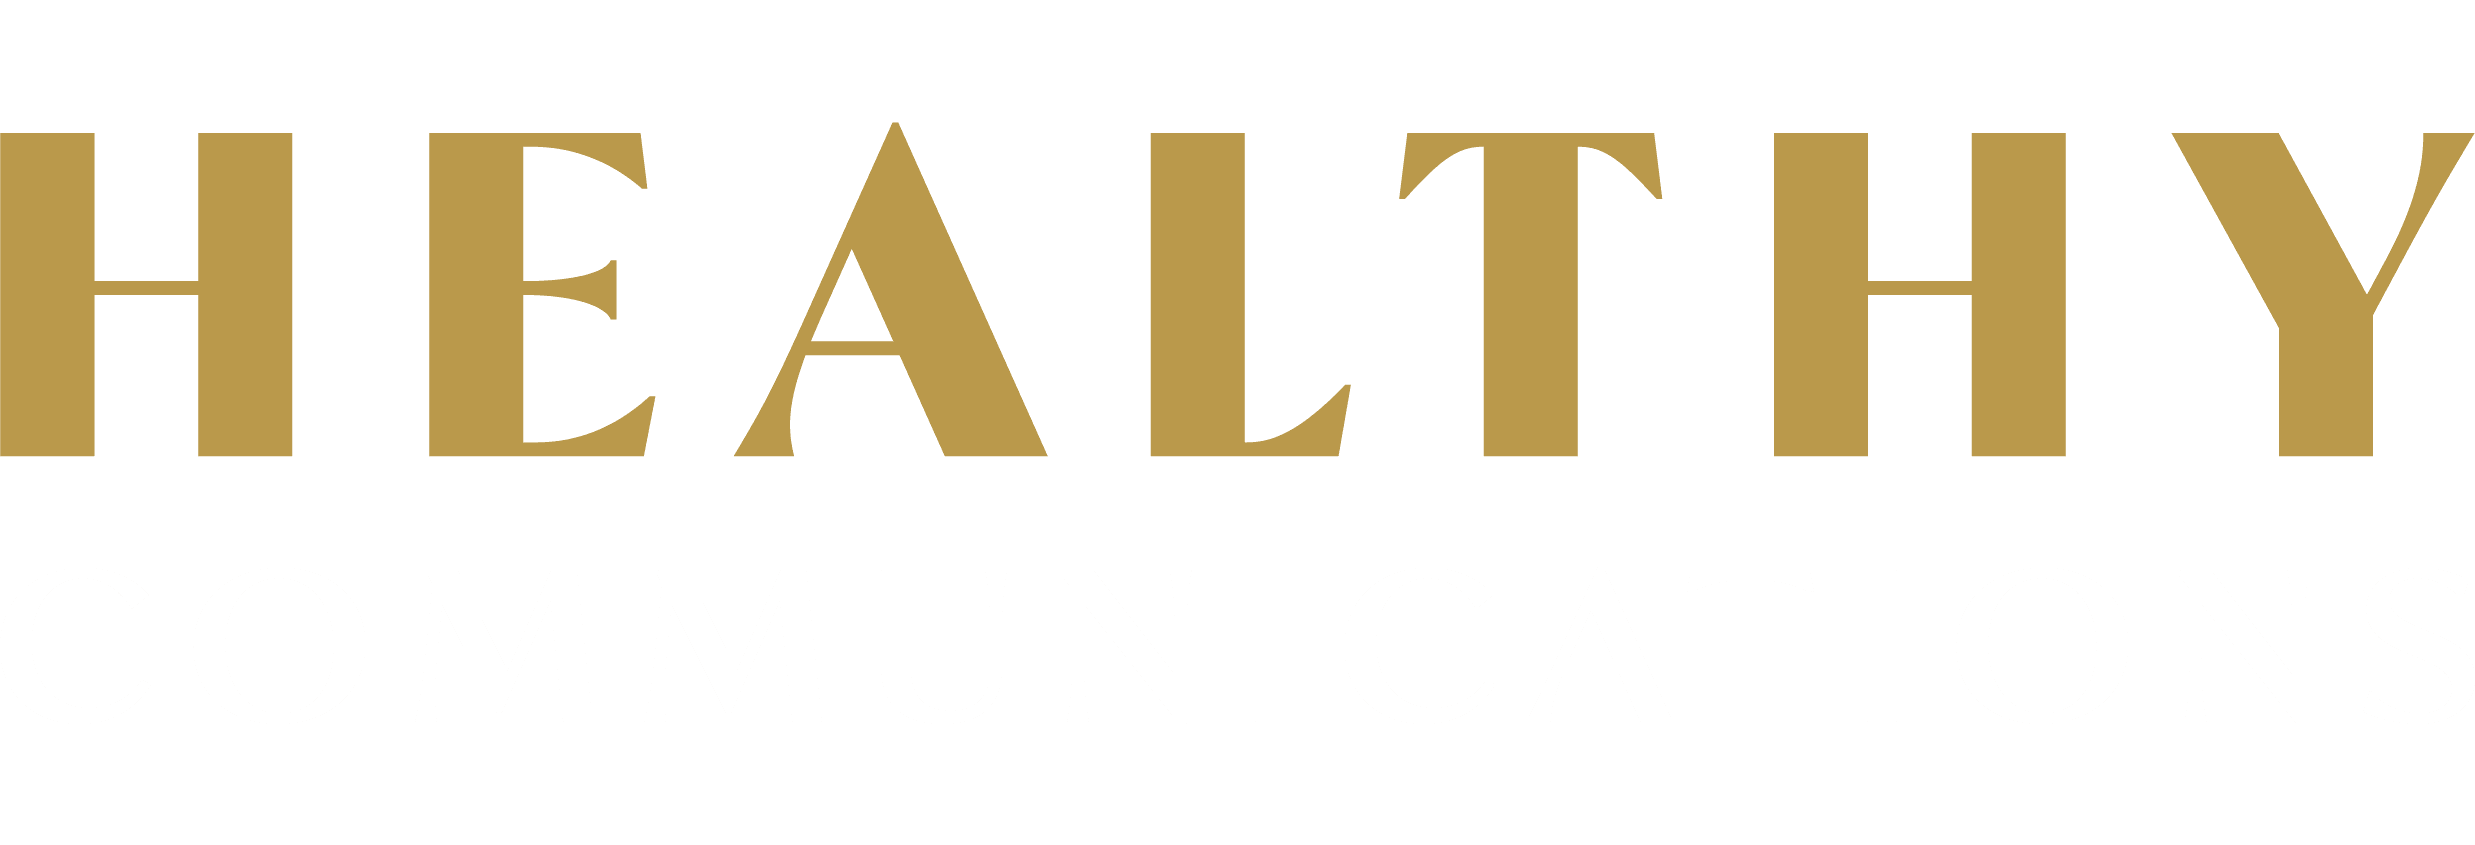 Healthy Communications Logo